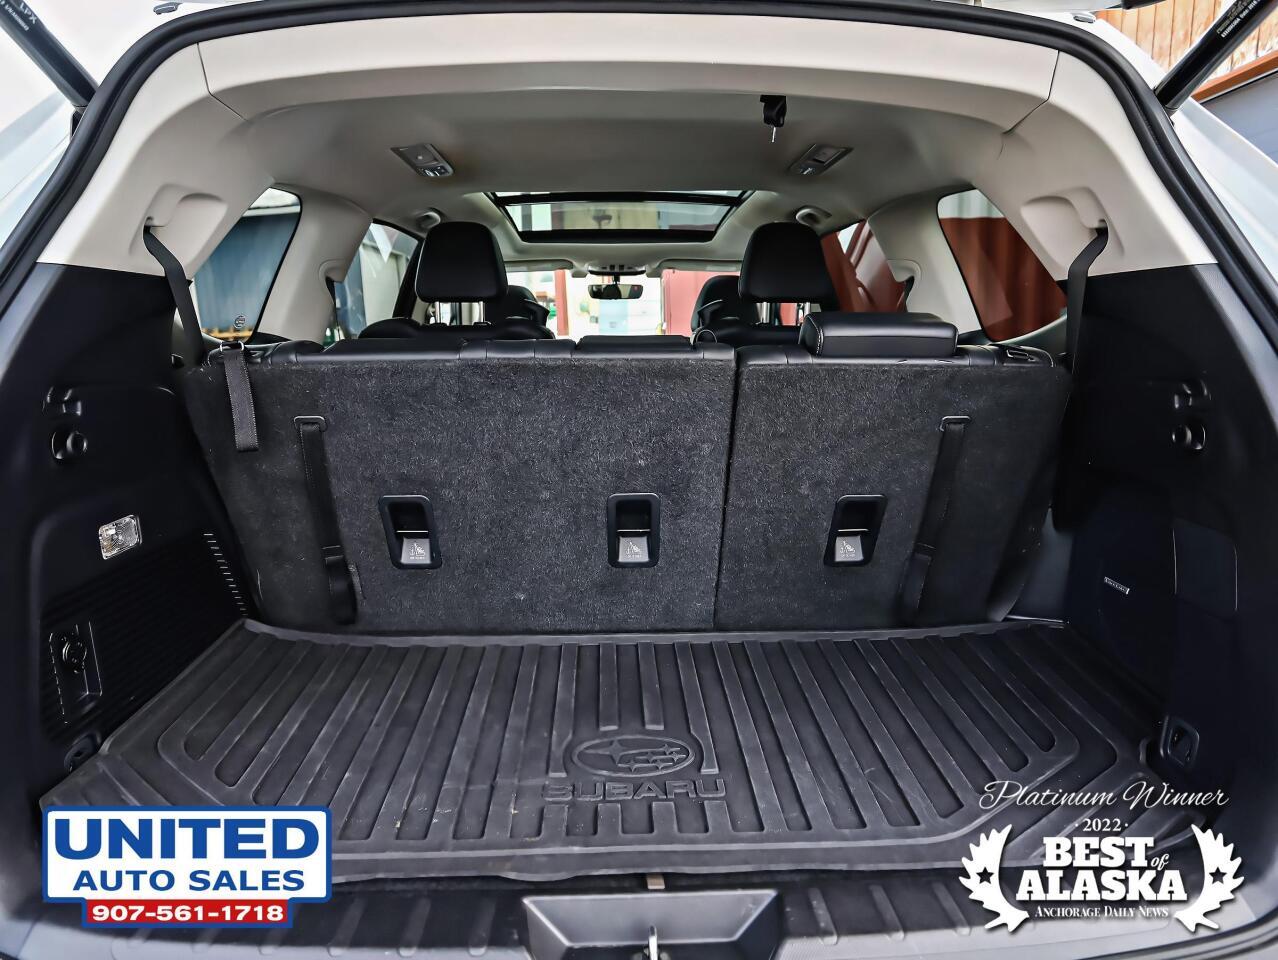 2019 Subaru Ascent Limited 7 Passenger AWD 4dr SUV 19